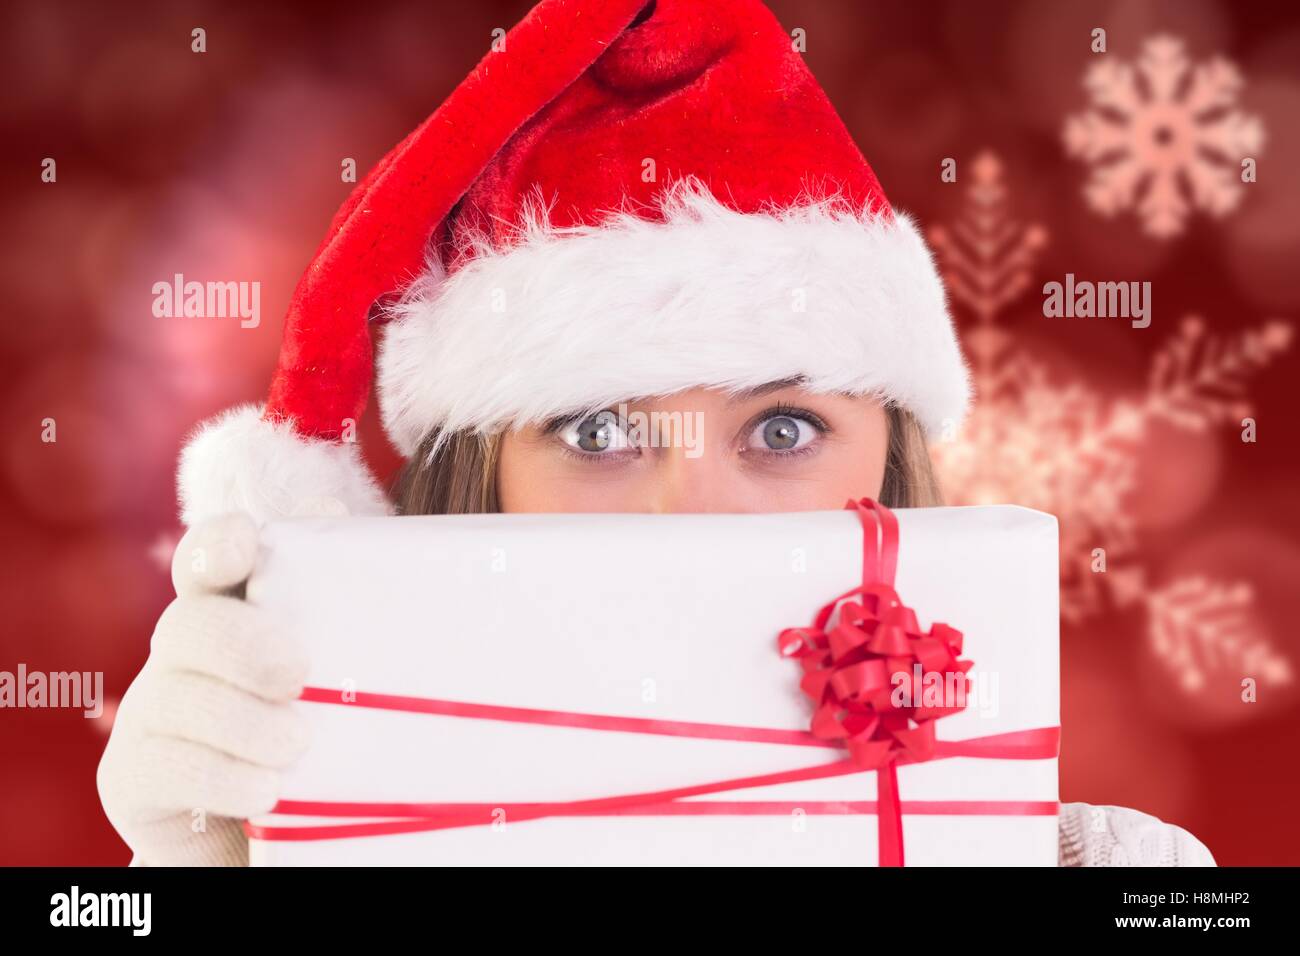 Woman in santa hat holding gift box Stock Photo